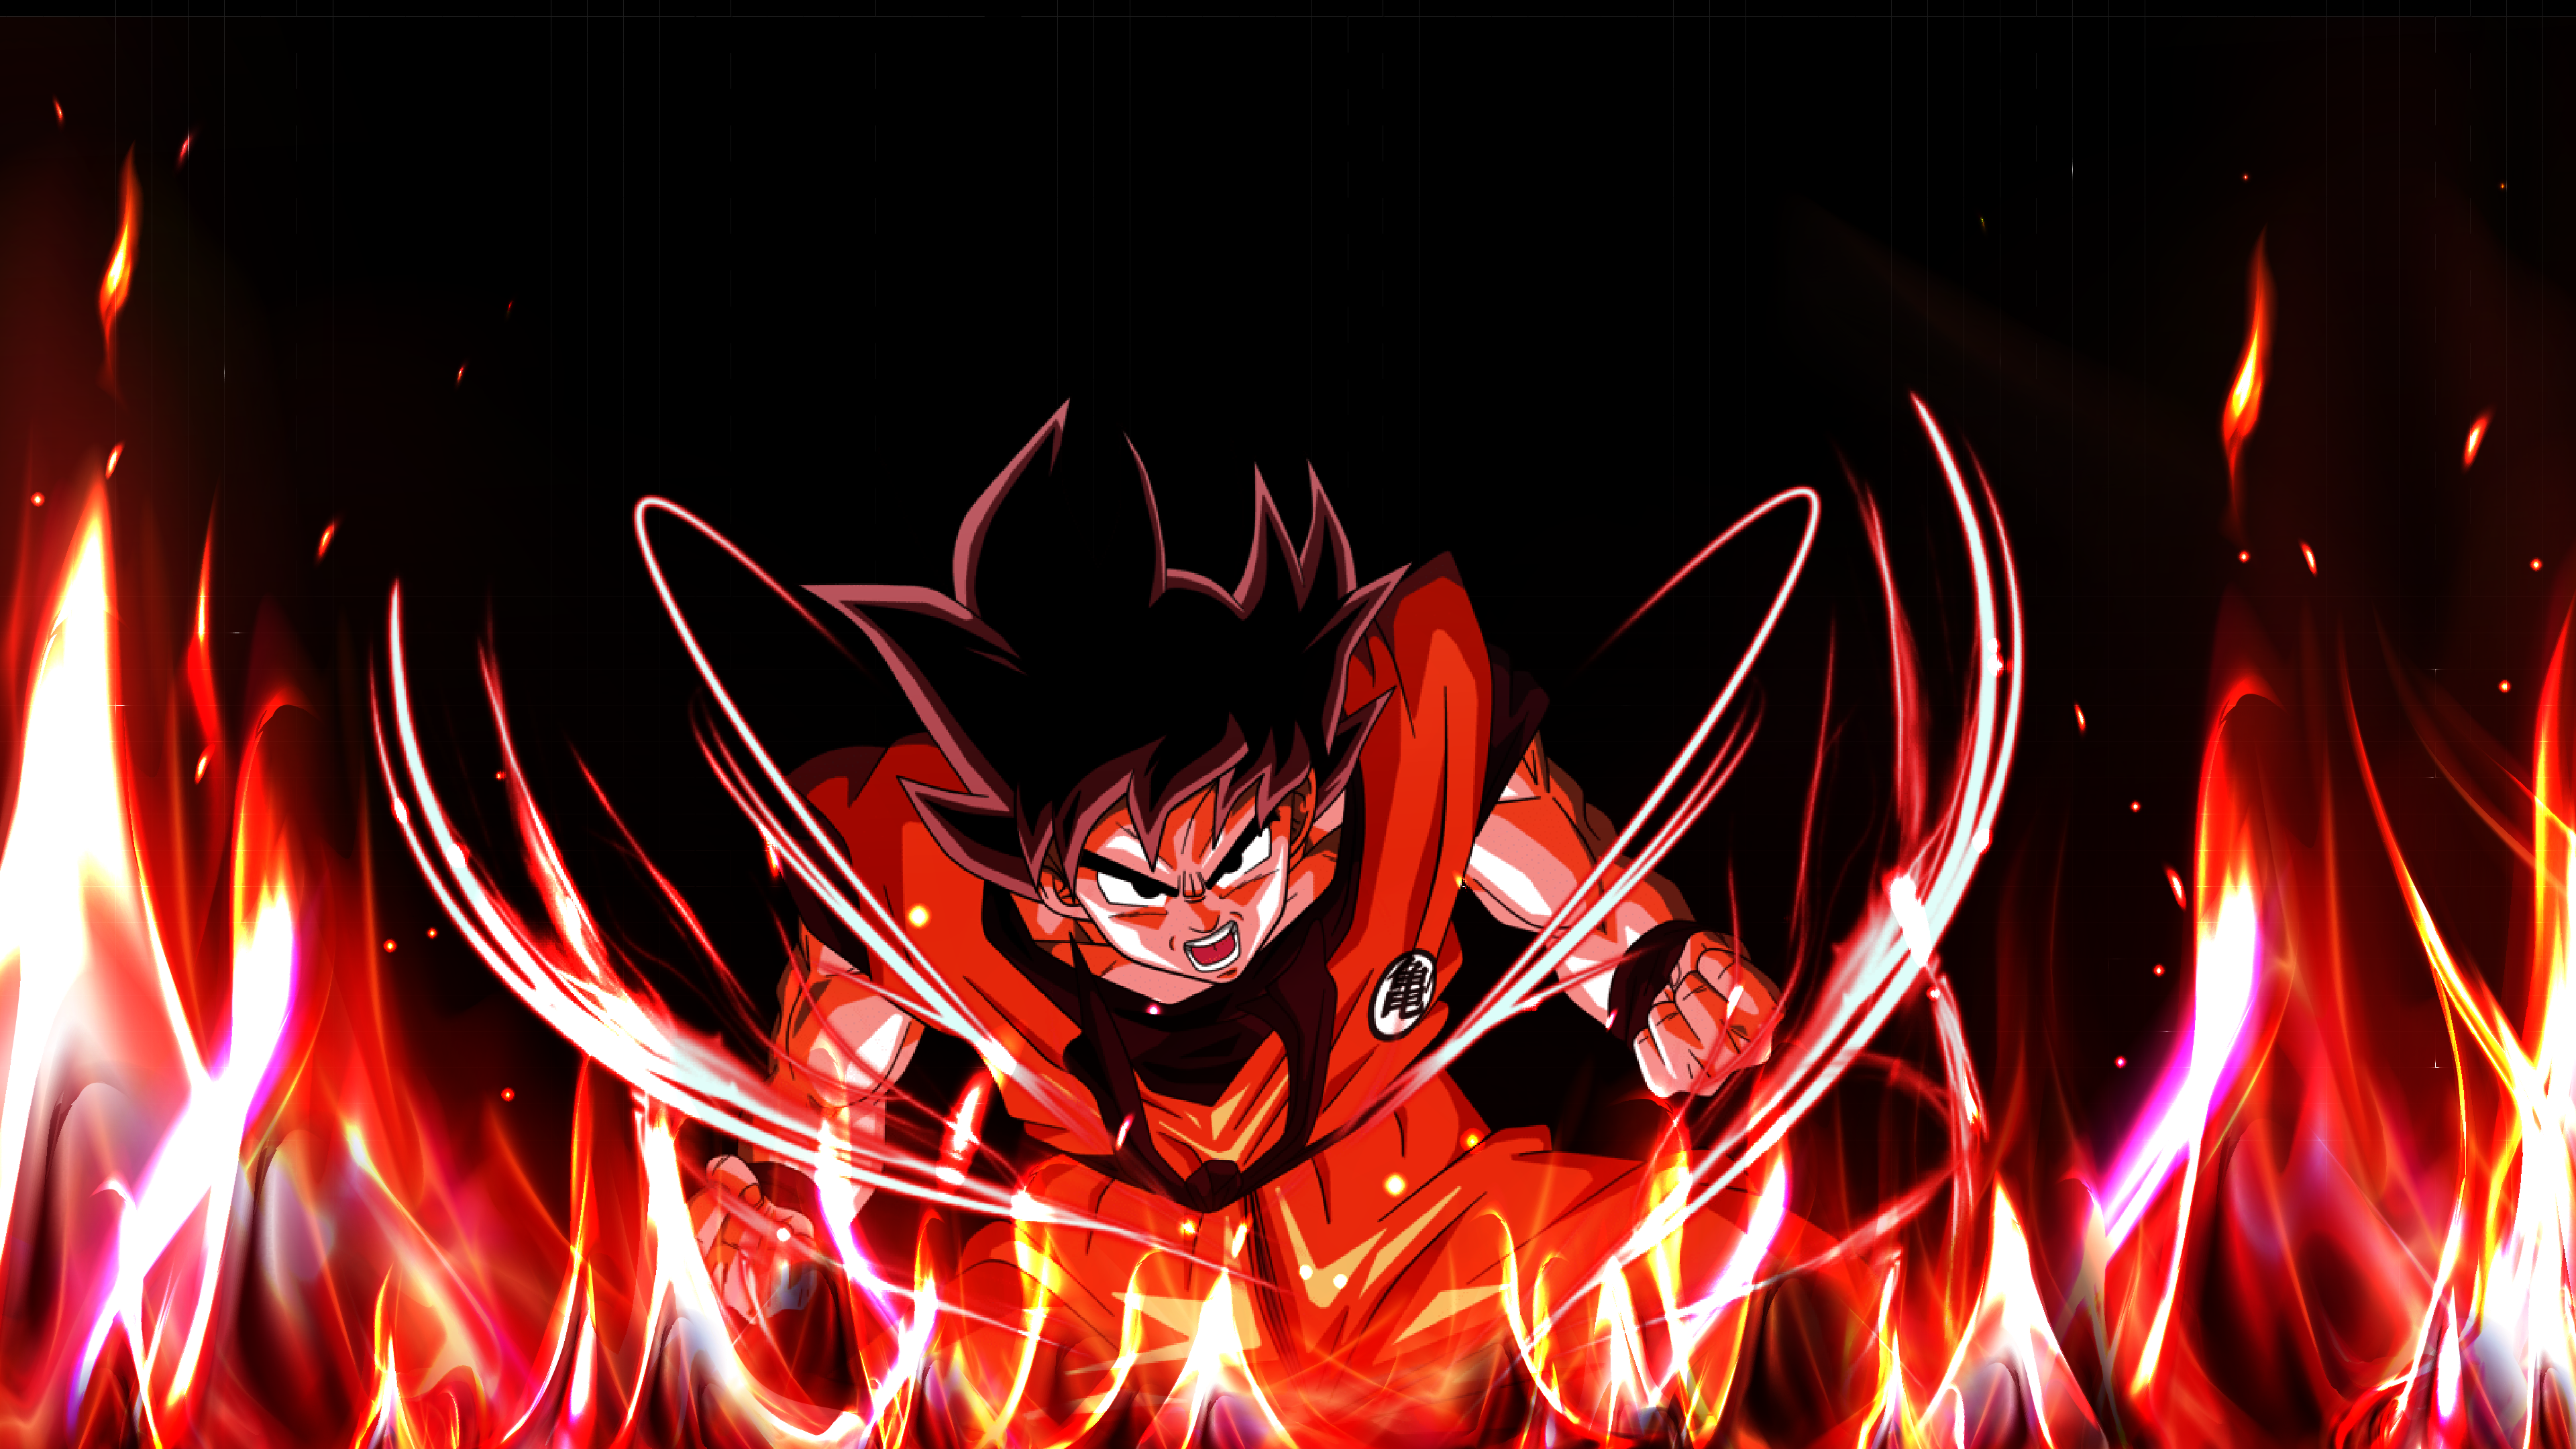 Goku 4K Ultra HD Wallpapers, HD Goku 3840x2160 Backgrounds, Free Images  Download